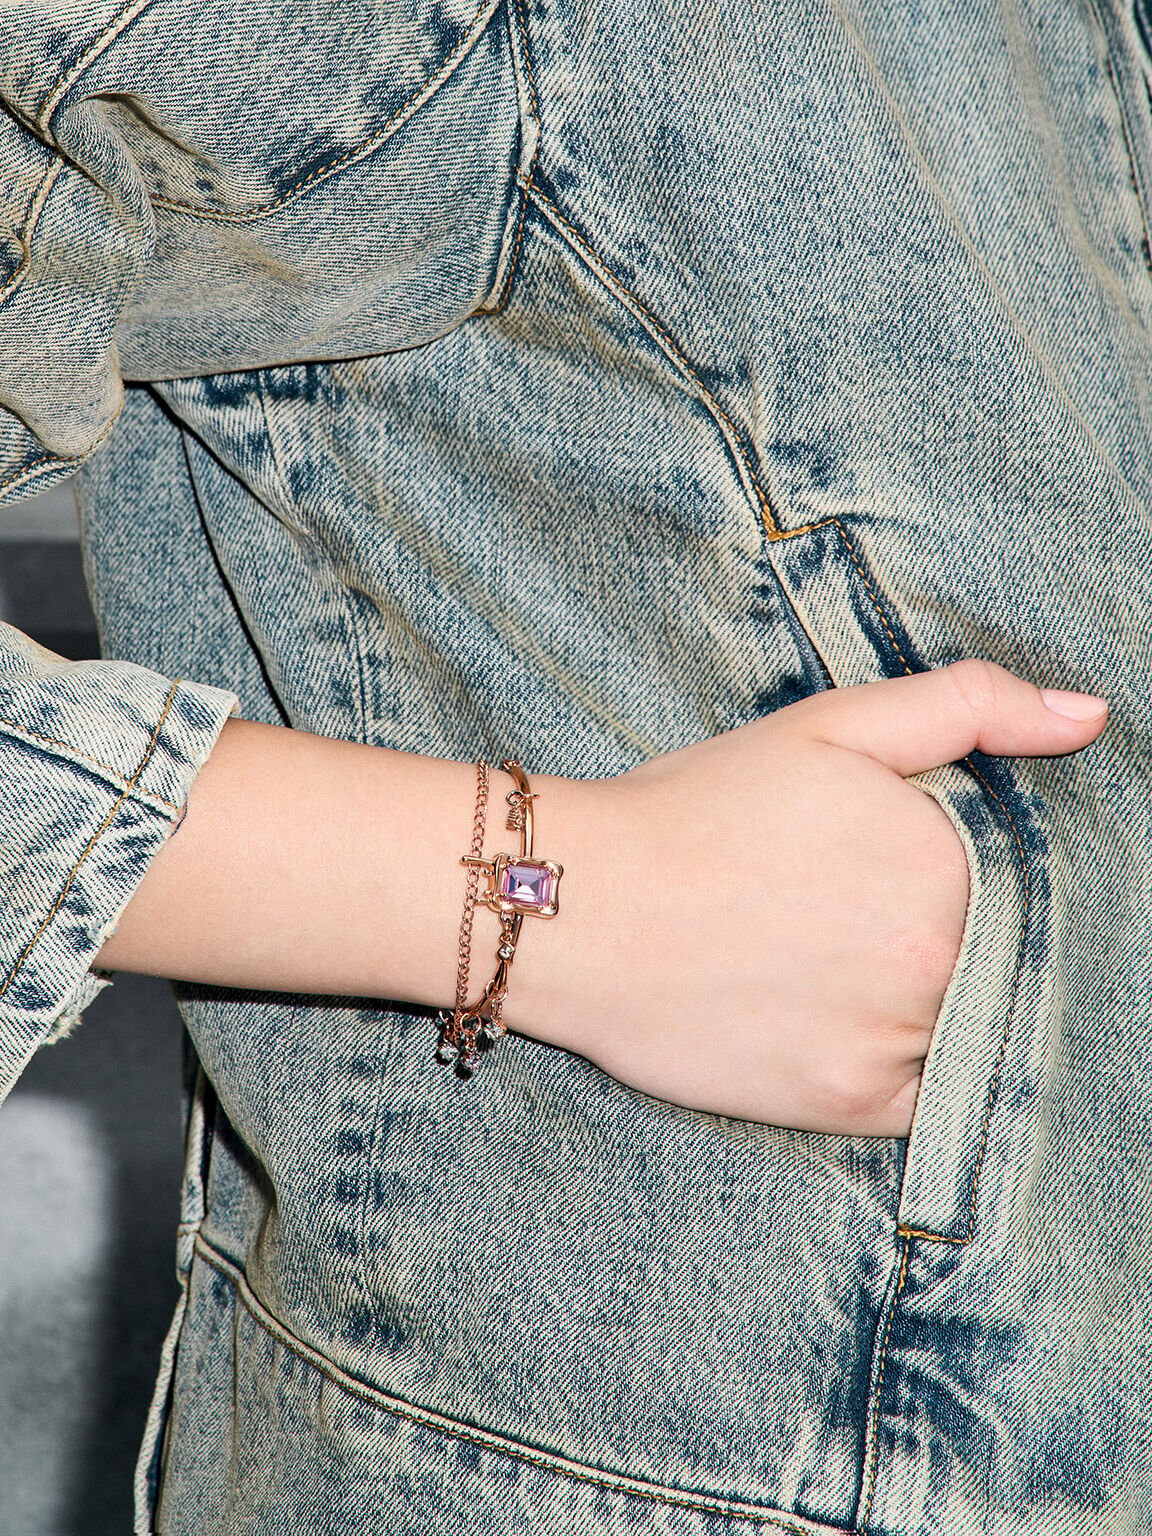 Zira Crystal Charm Cuff Bracelet, Rose Gold, hi-res